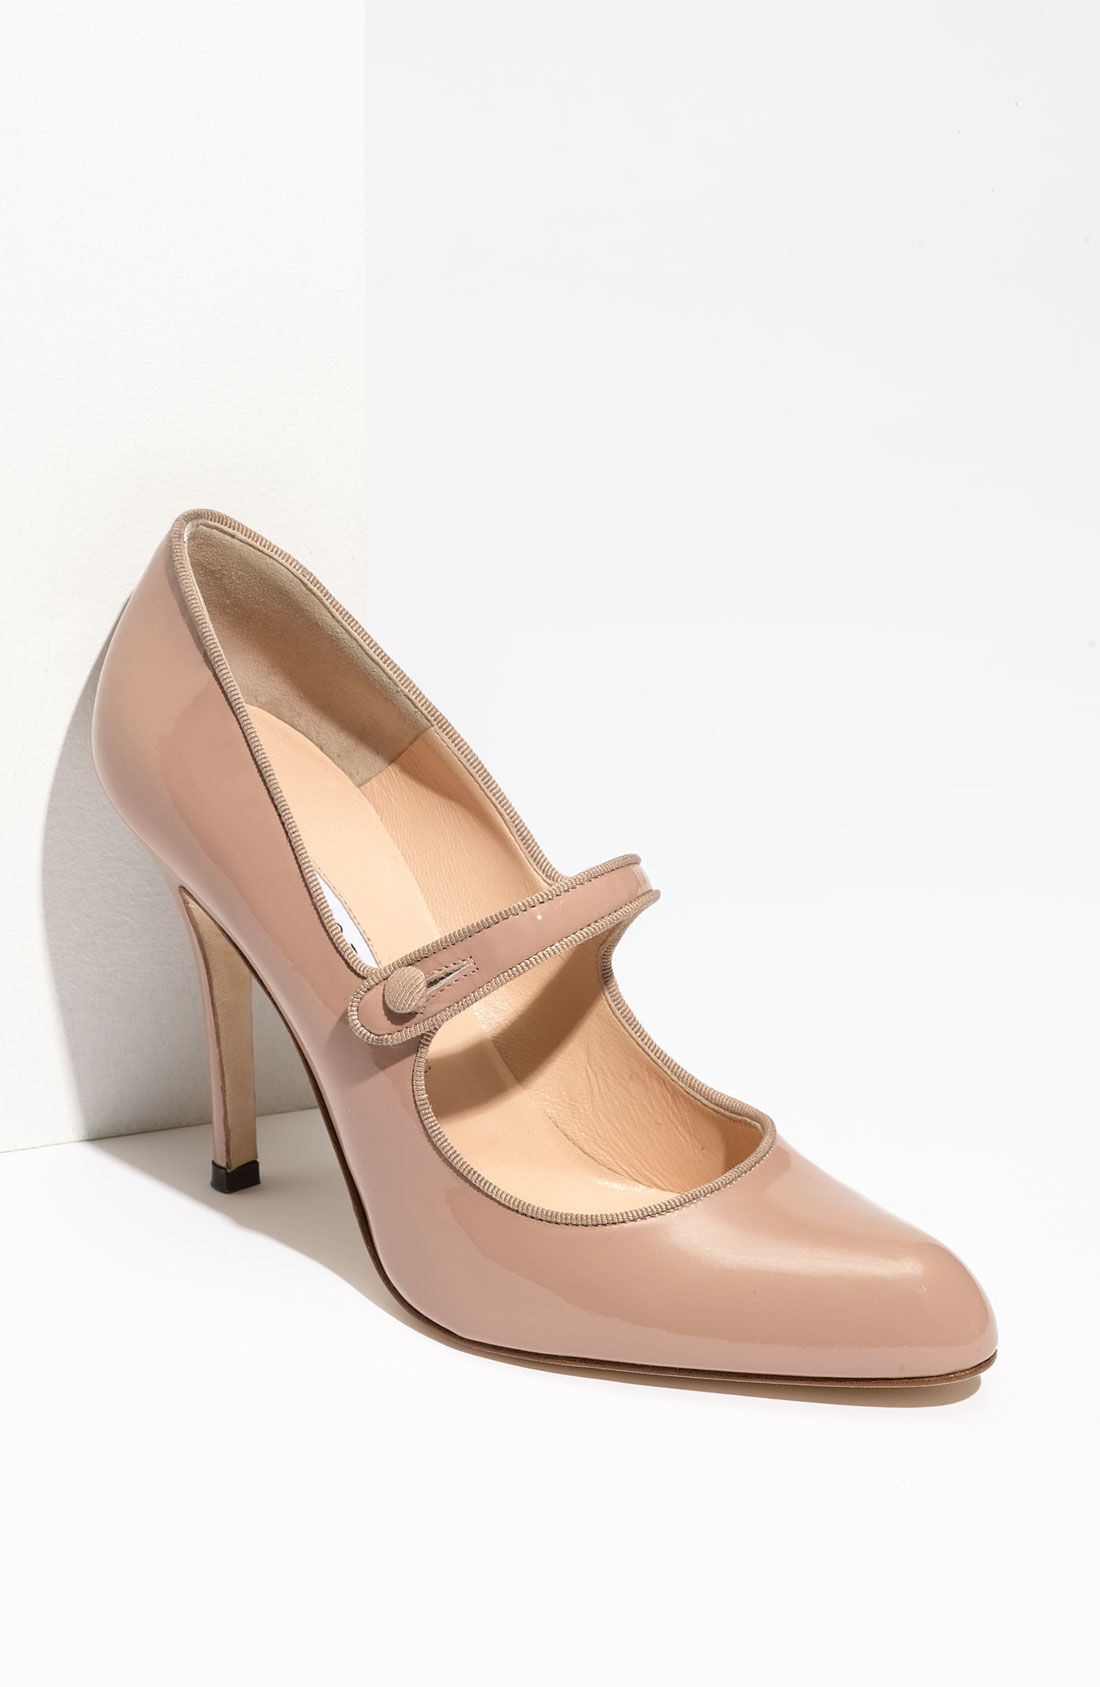 Campy patent nude mary jane heels 